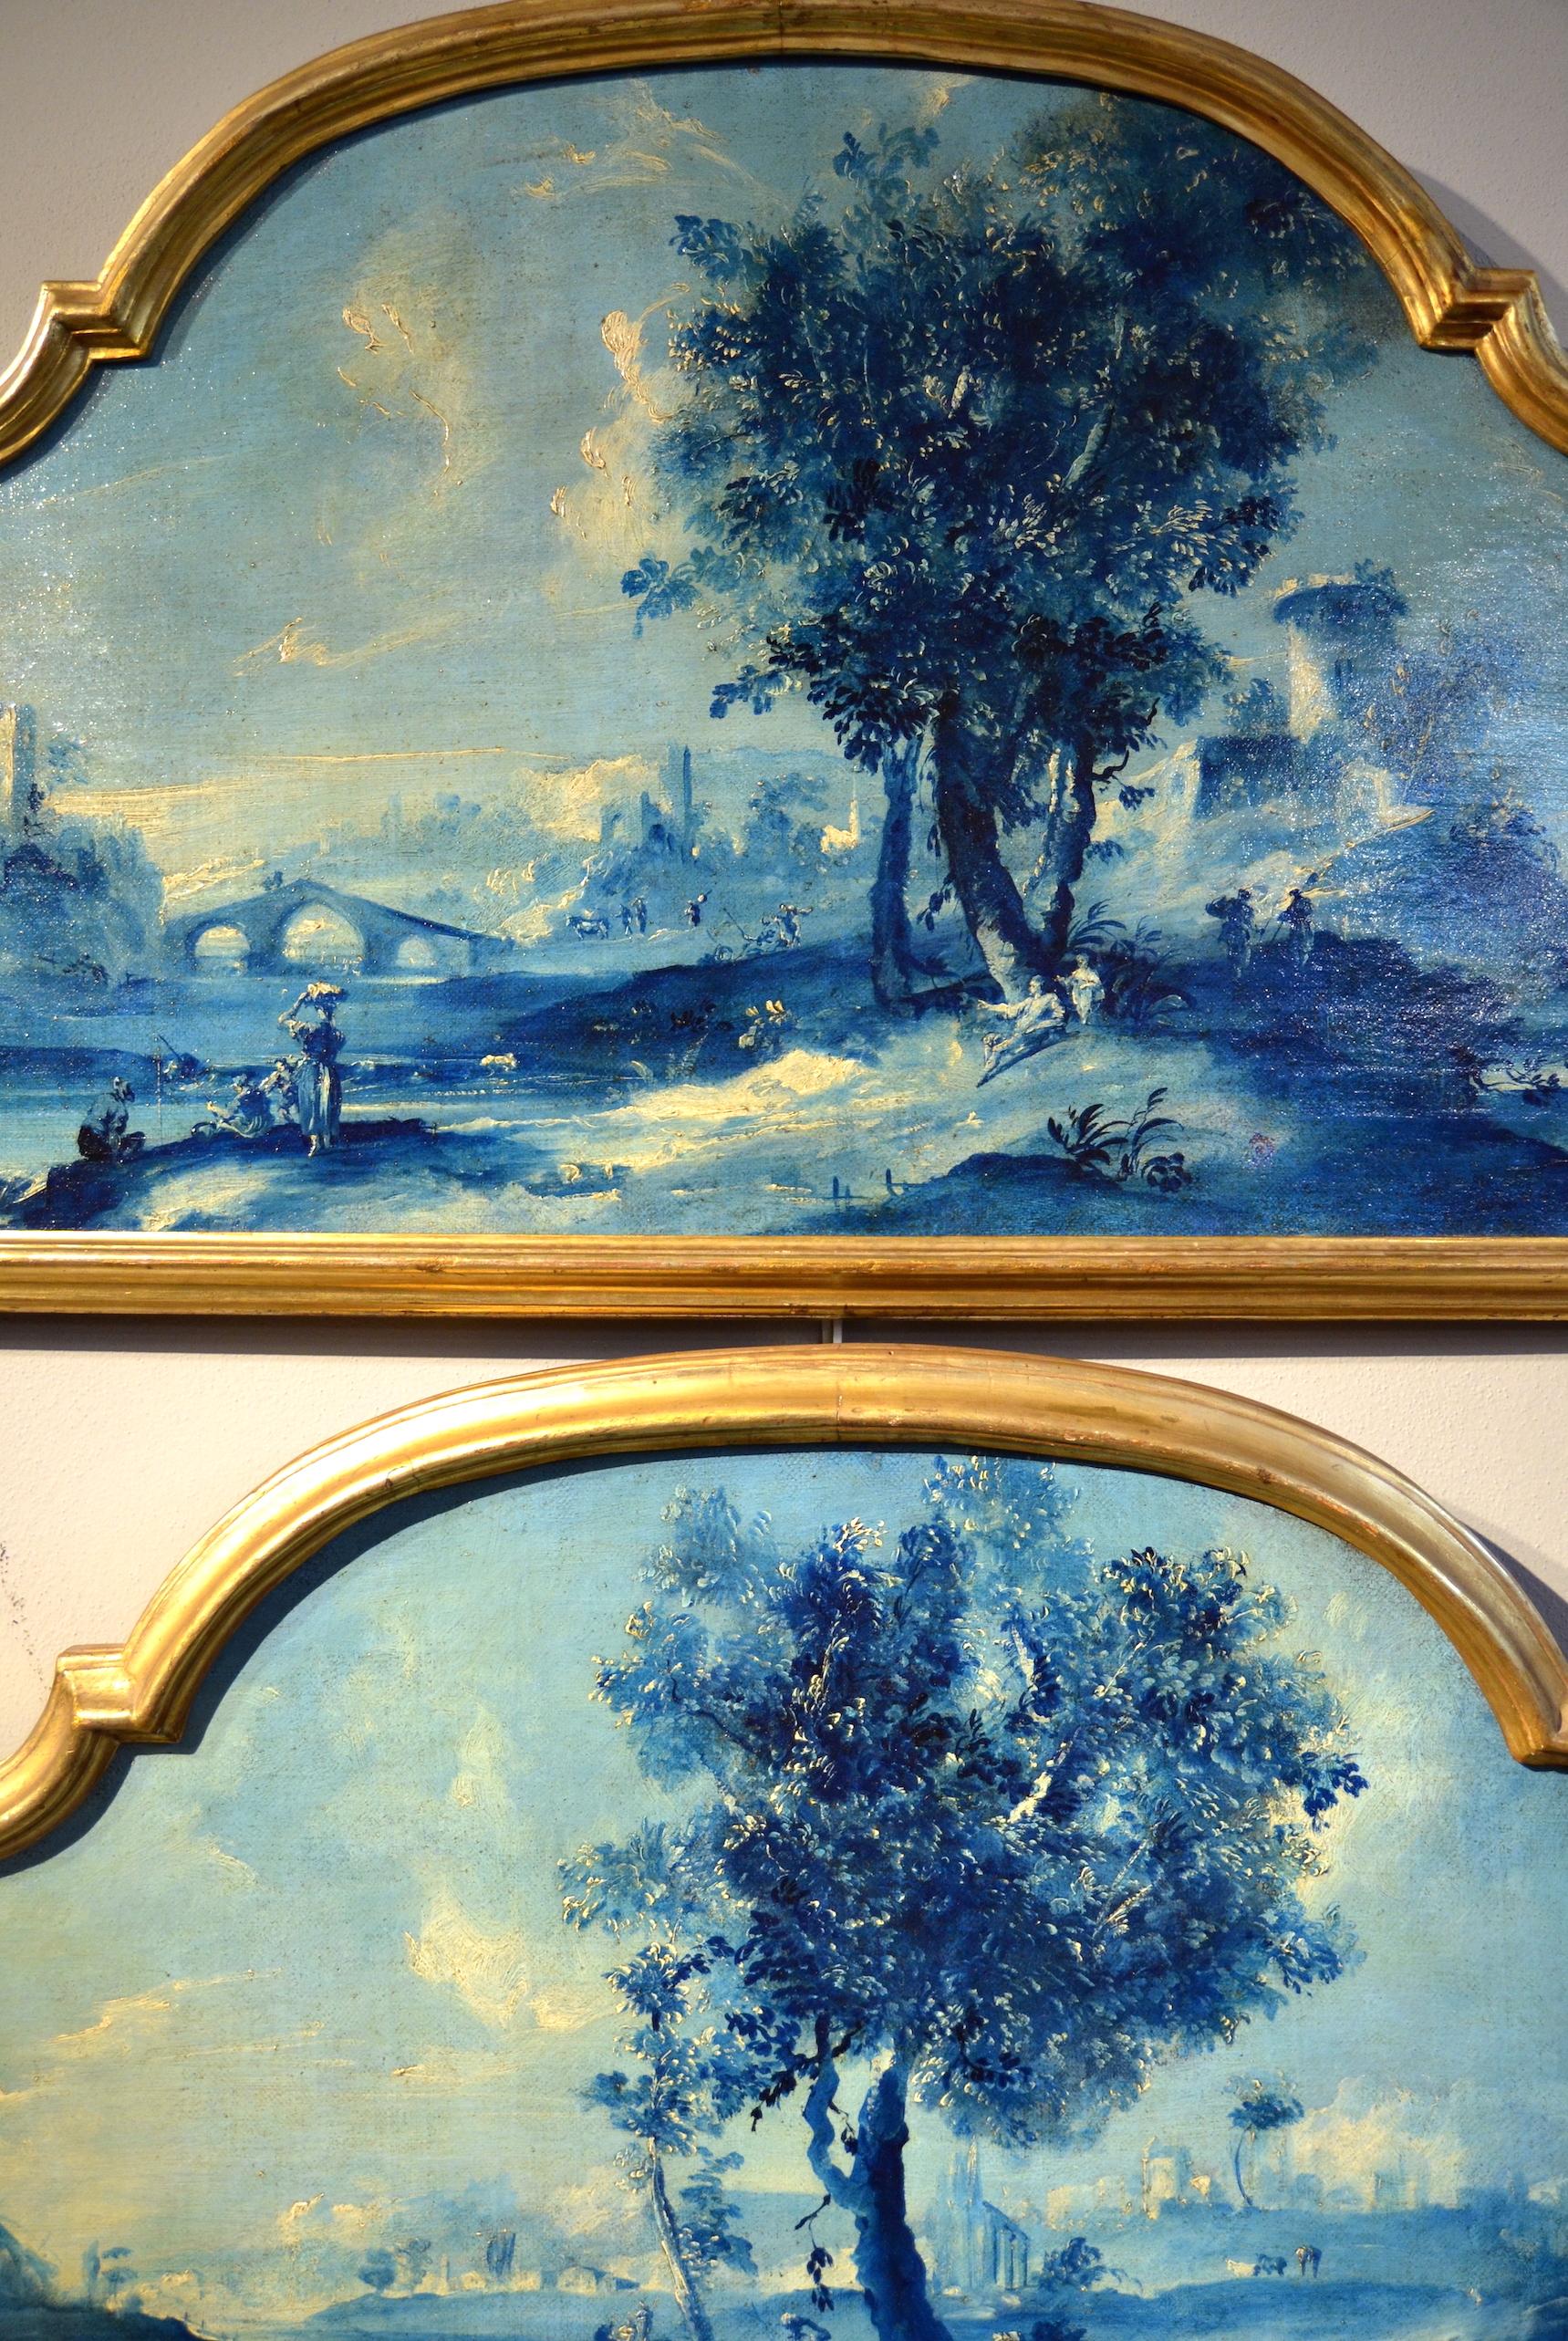 Paint Oil on canvas Pair Landscape Wood See Lake Venezia Italy Baroque Ricci Art 7